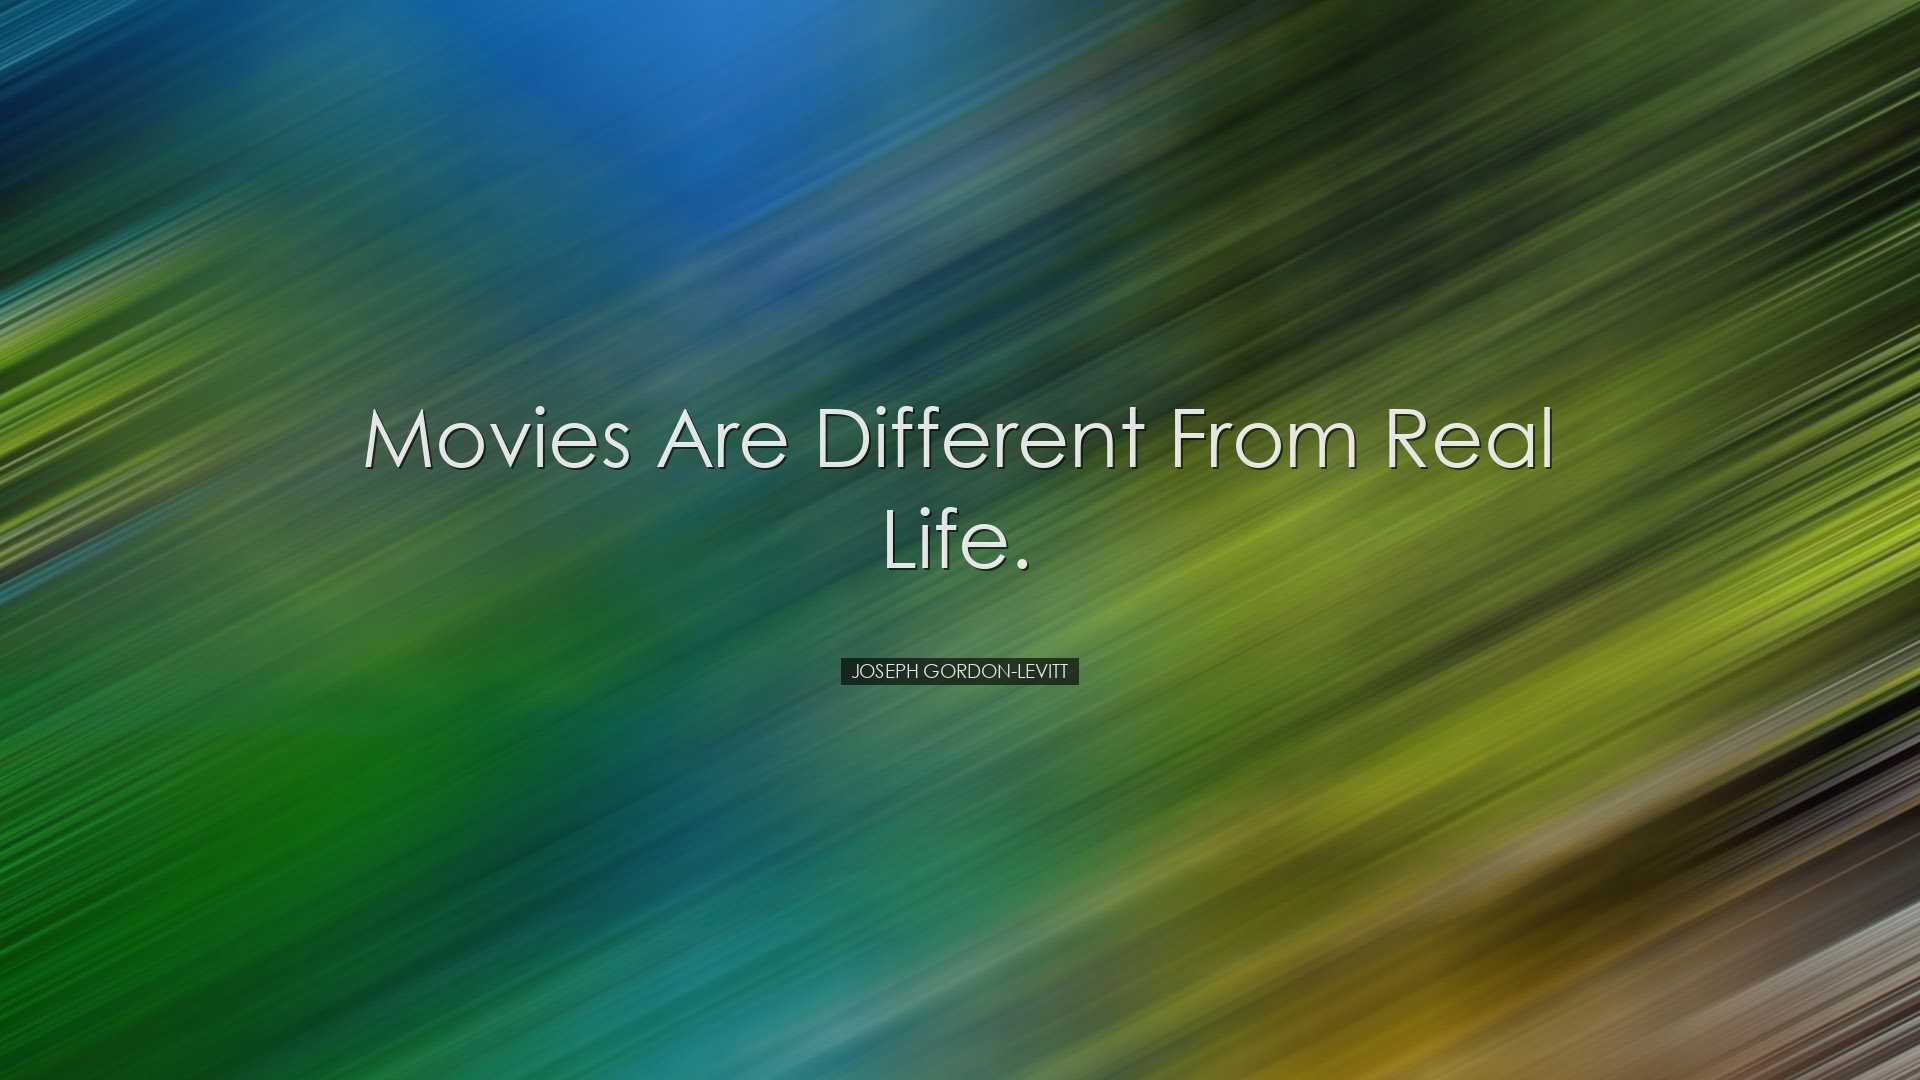 Movies are different from real life. - Joseph Gordon-Levitt